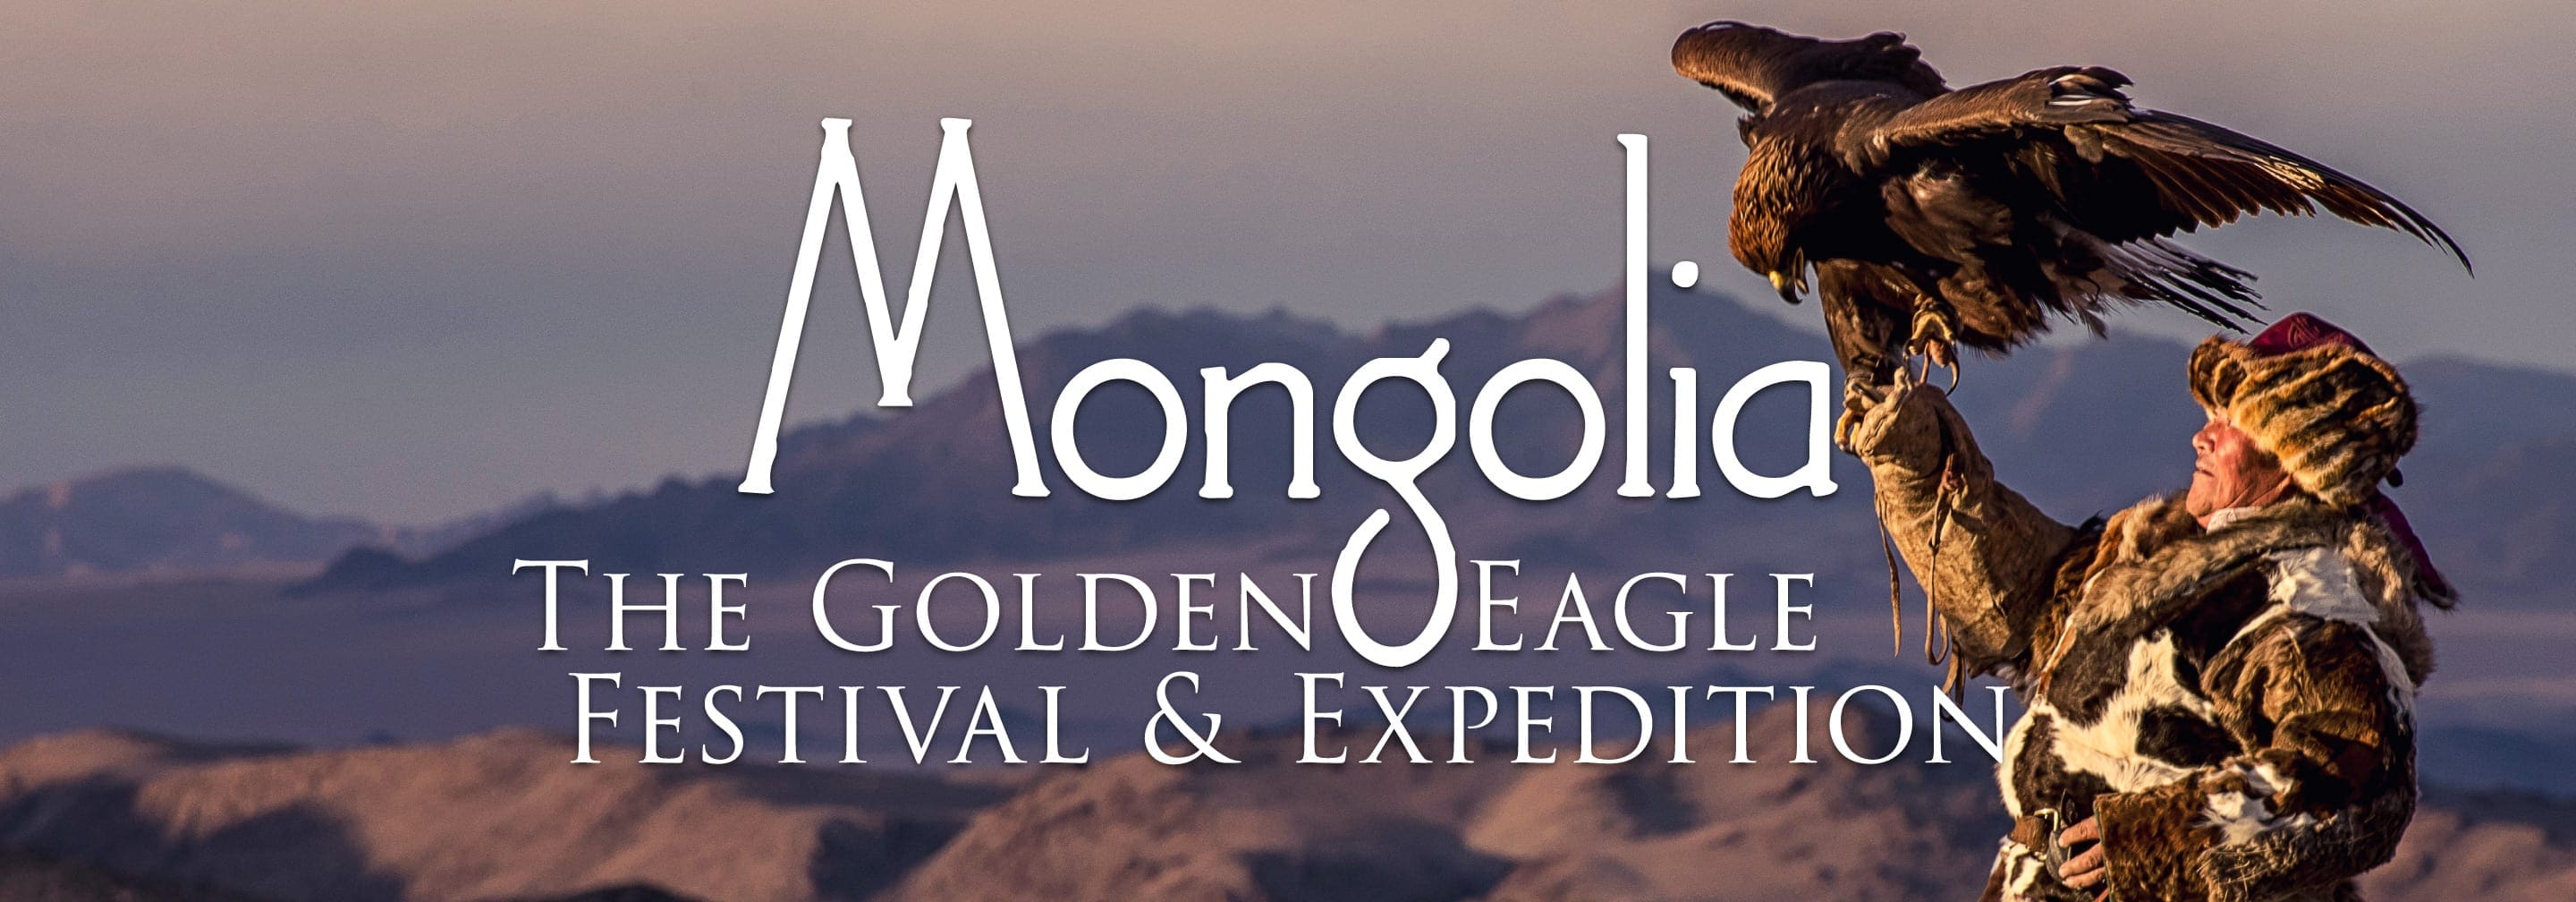 Mongolia: The Golden Eagle Festival & Expedition header image